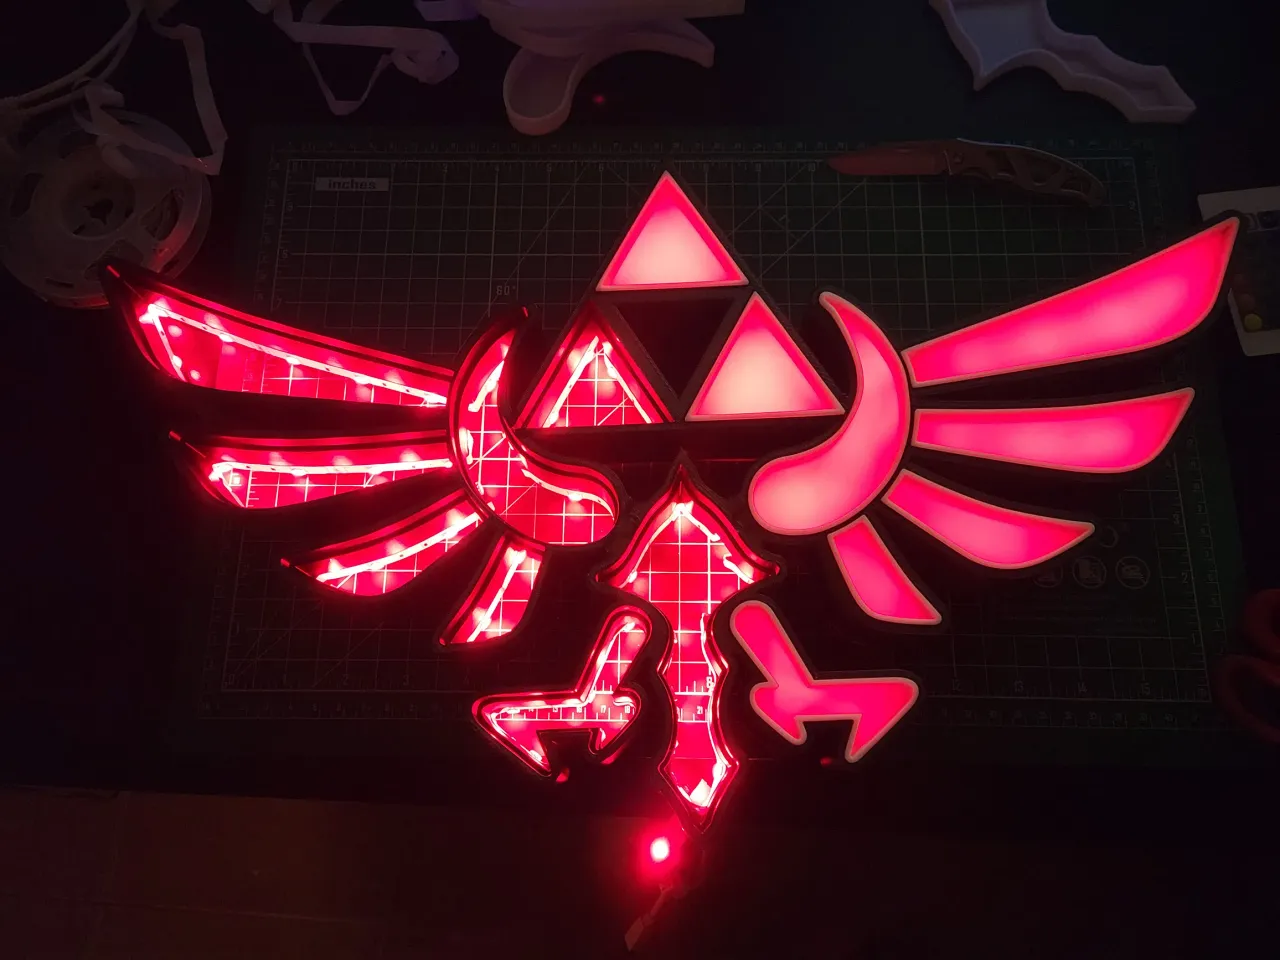 Hylian Shield Legend of Zelda LED Neon Sign